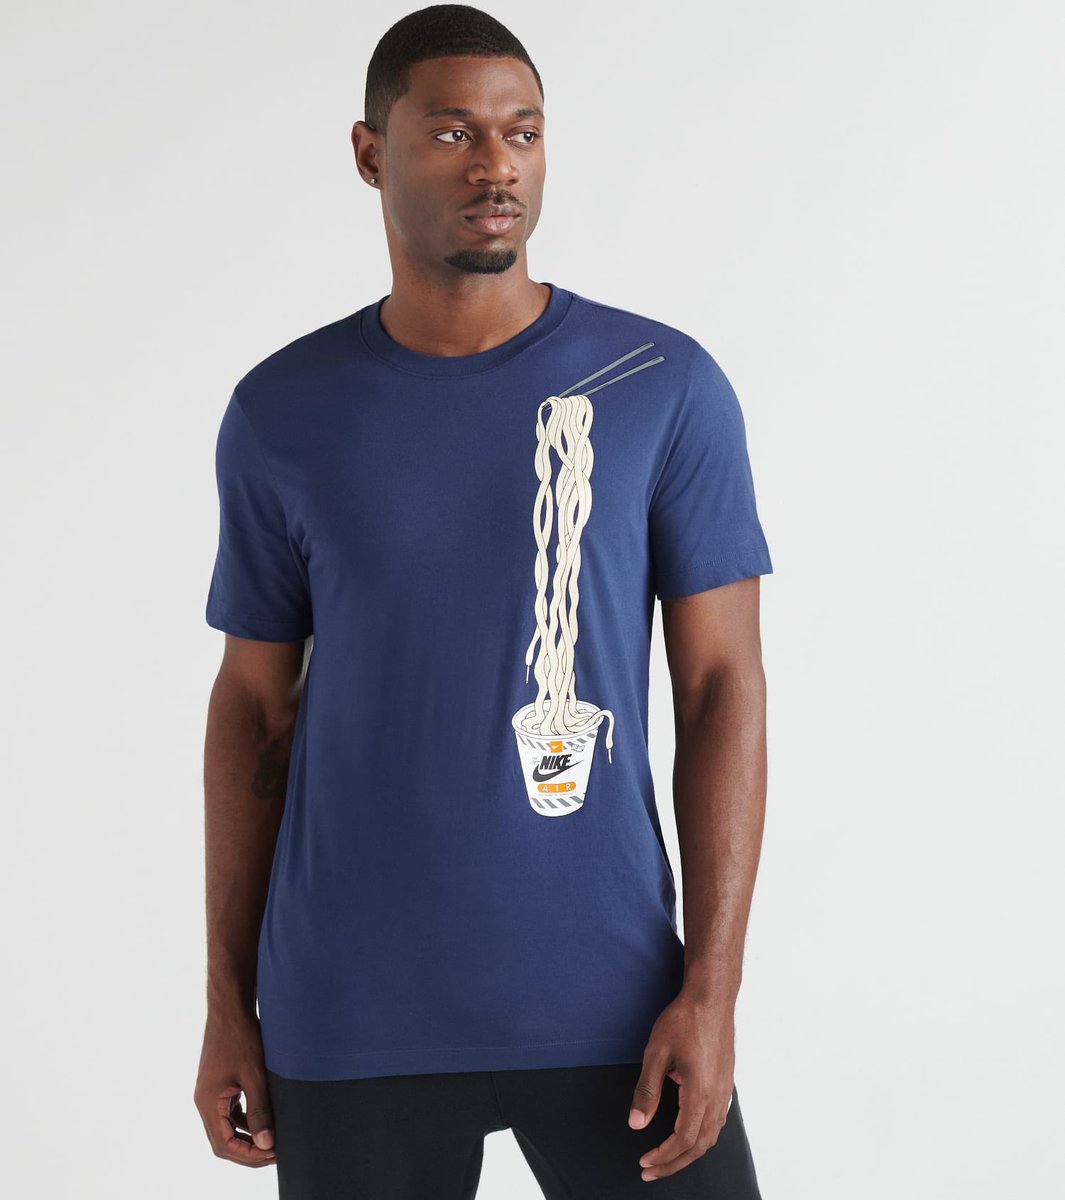 SNKR_TWITR on Twitter: "Nike Sportswear 'Noodle' tee available via  @JimmyJazzStores https://t.co/NMiBQ2BndZ #AD https://t.co/bKnoZ7uUDb" /  Twitter